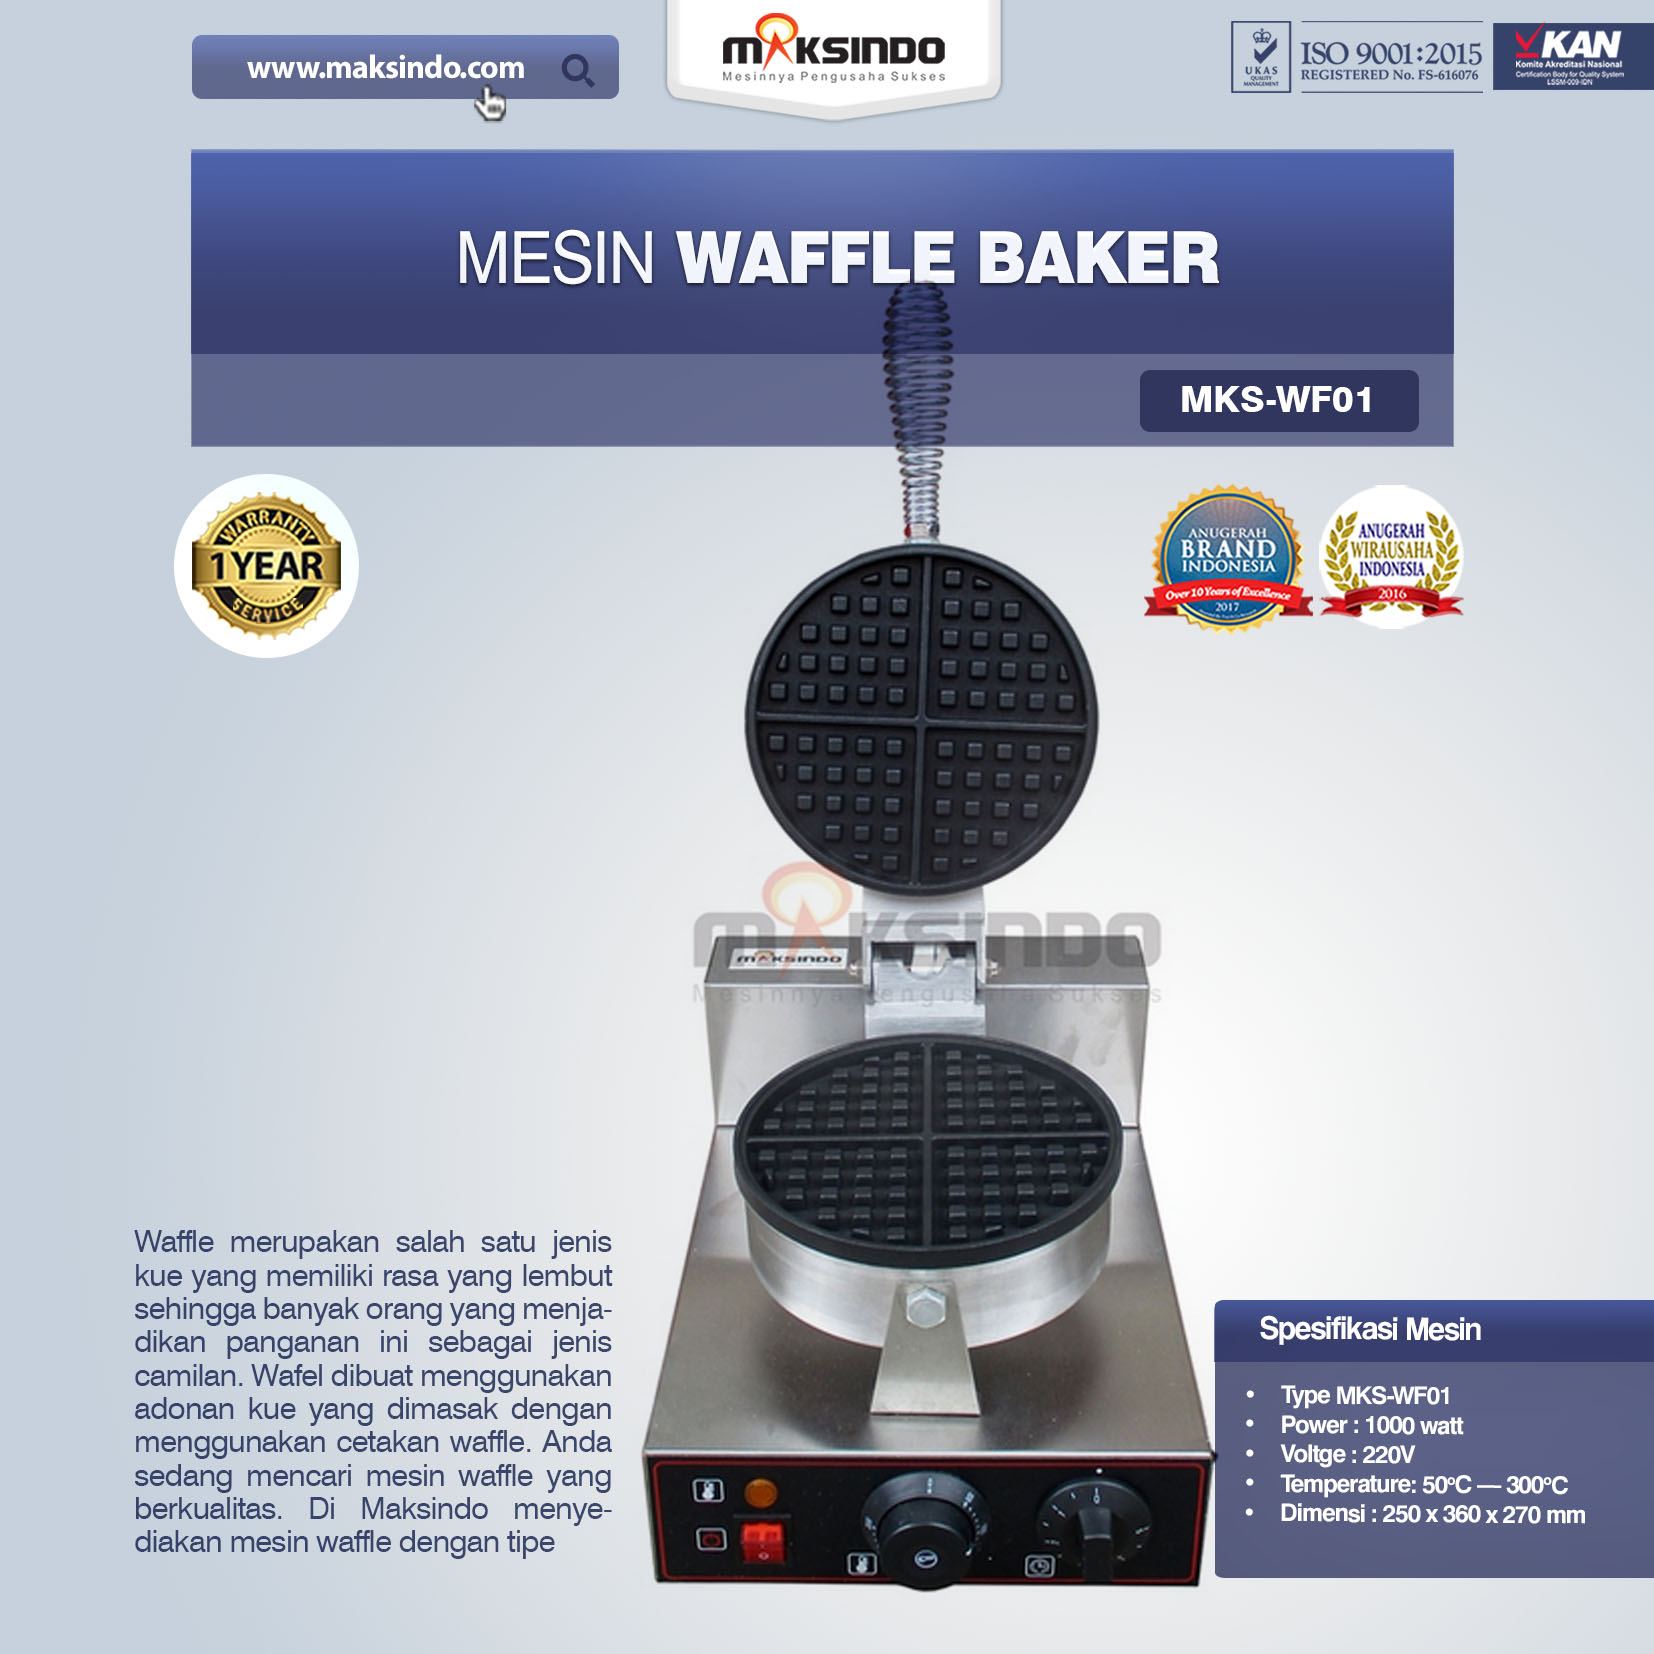 Jual Mesin Waffle Baker MKS-WF01 Di Banjarmasin